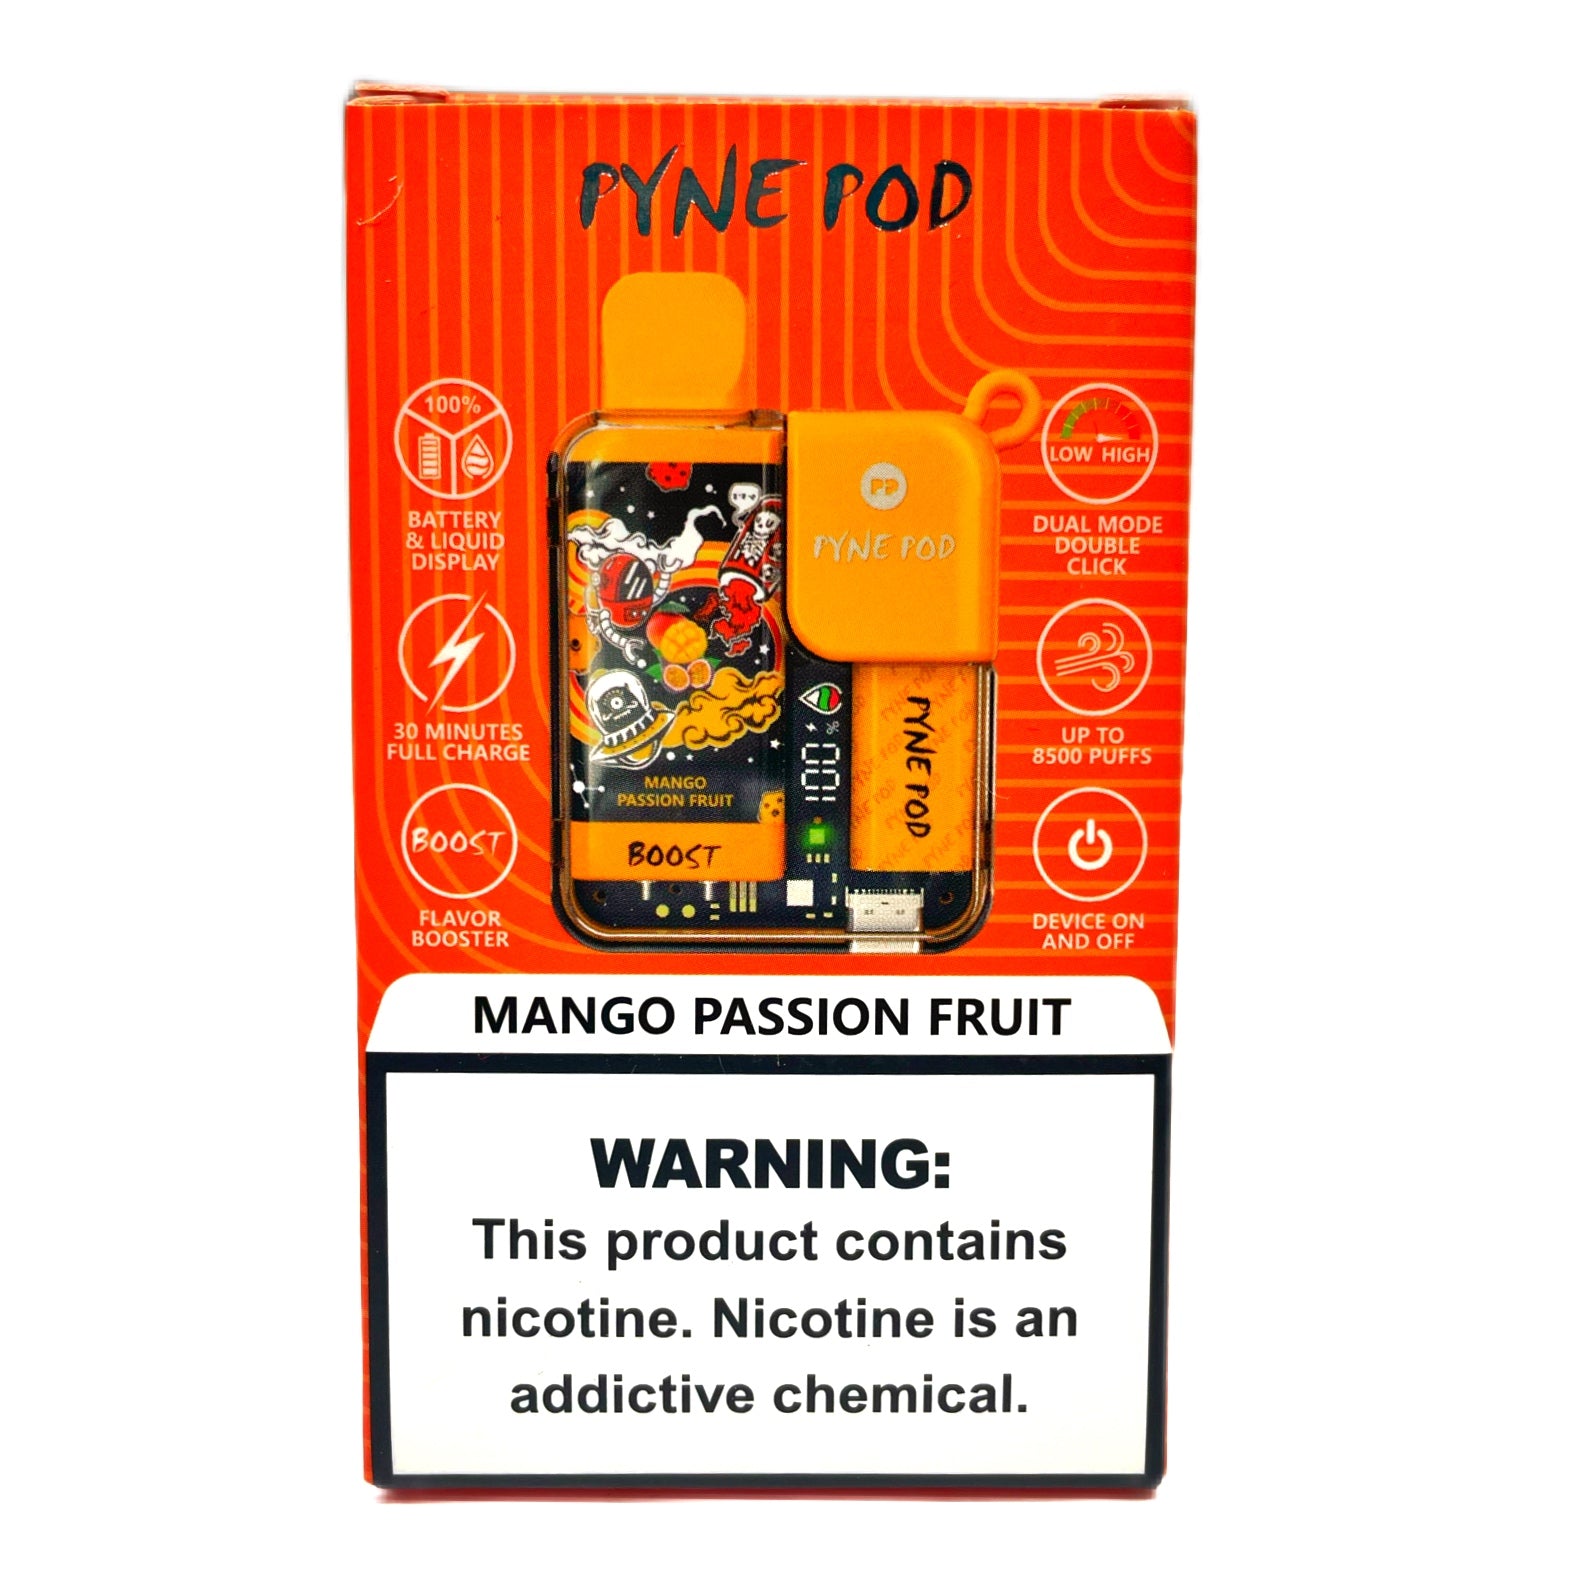     Pyne Pod Flavor Mango Passion Fruit